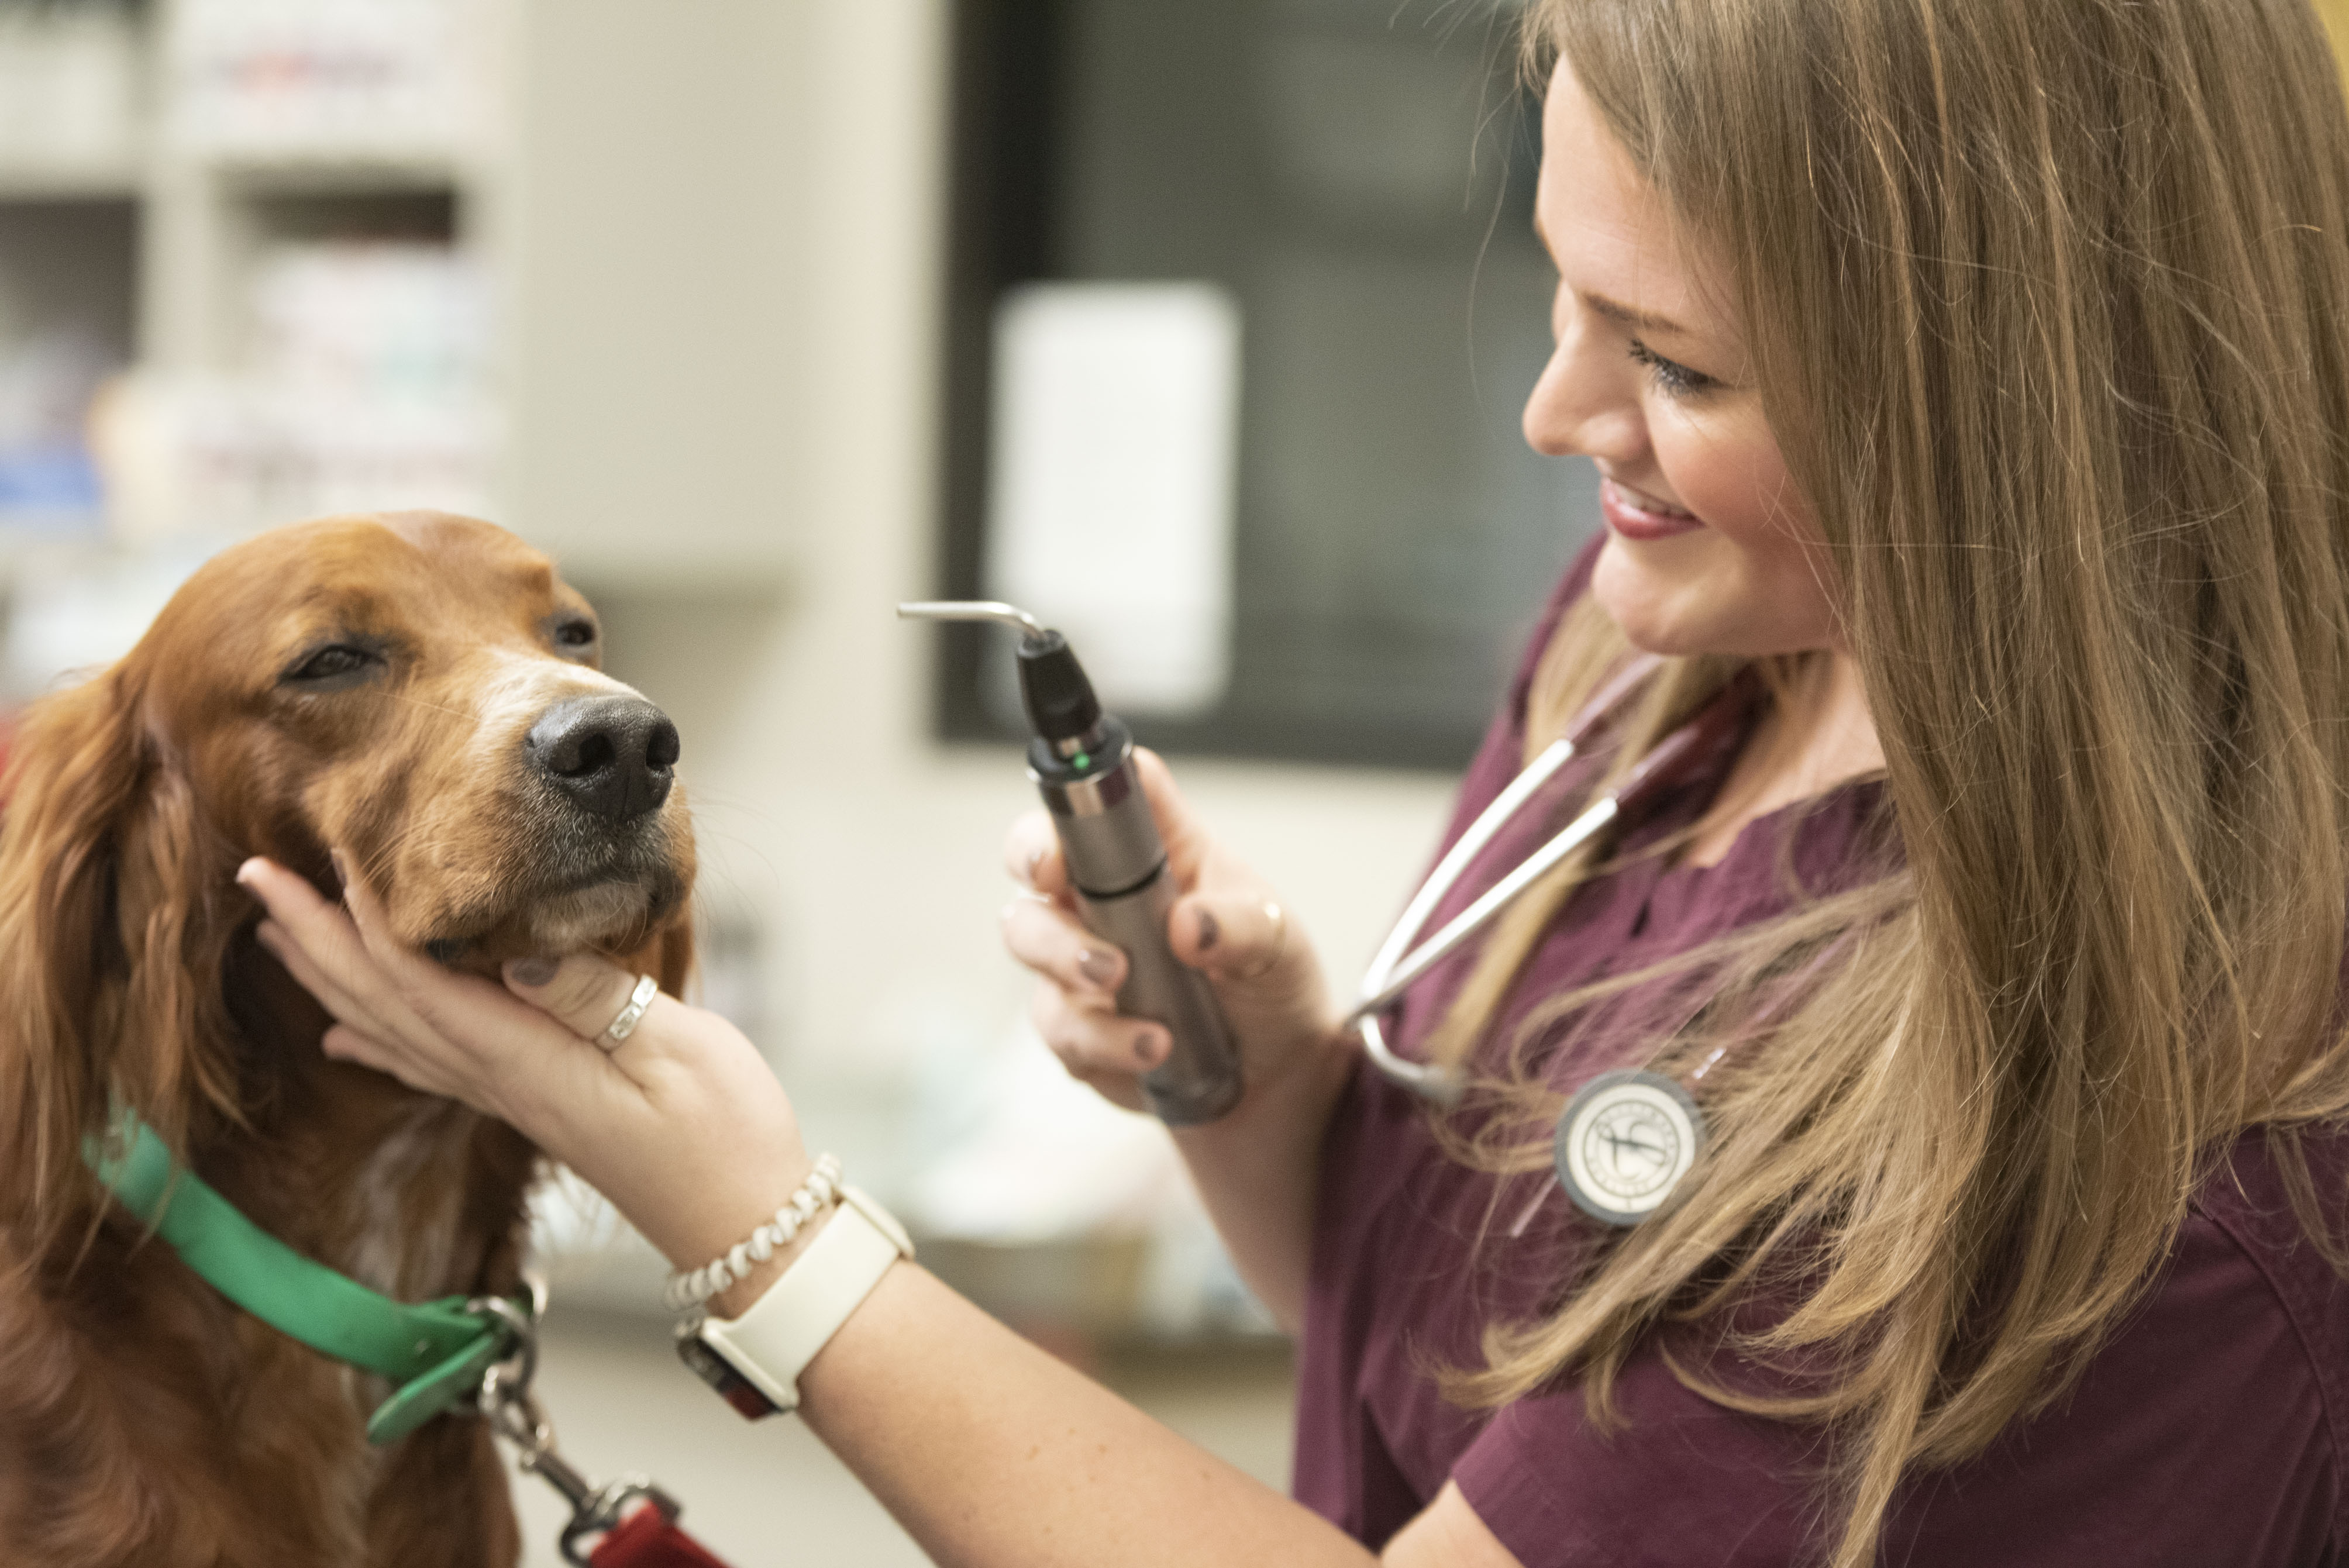 A veterinarian examines a dog's eyes